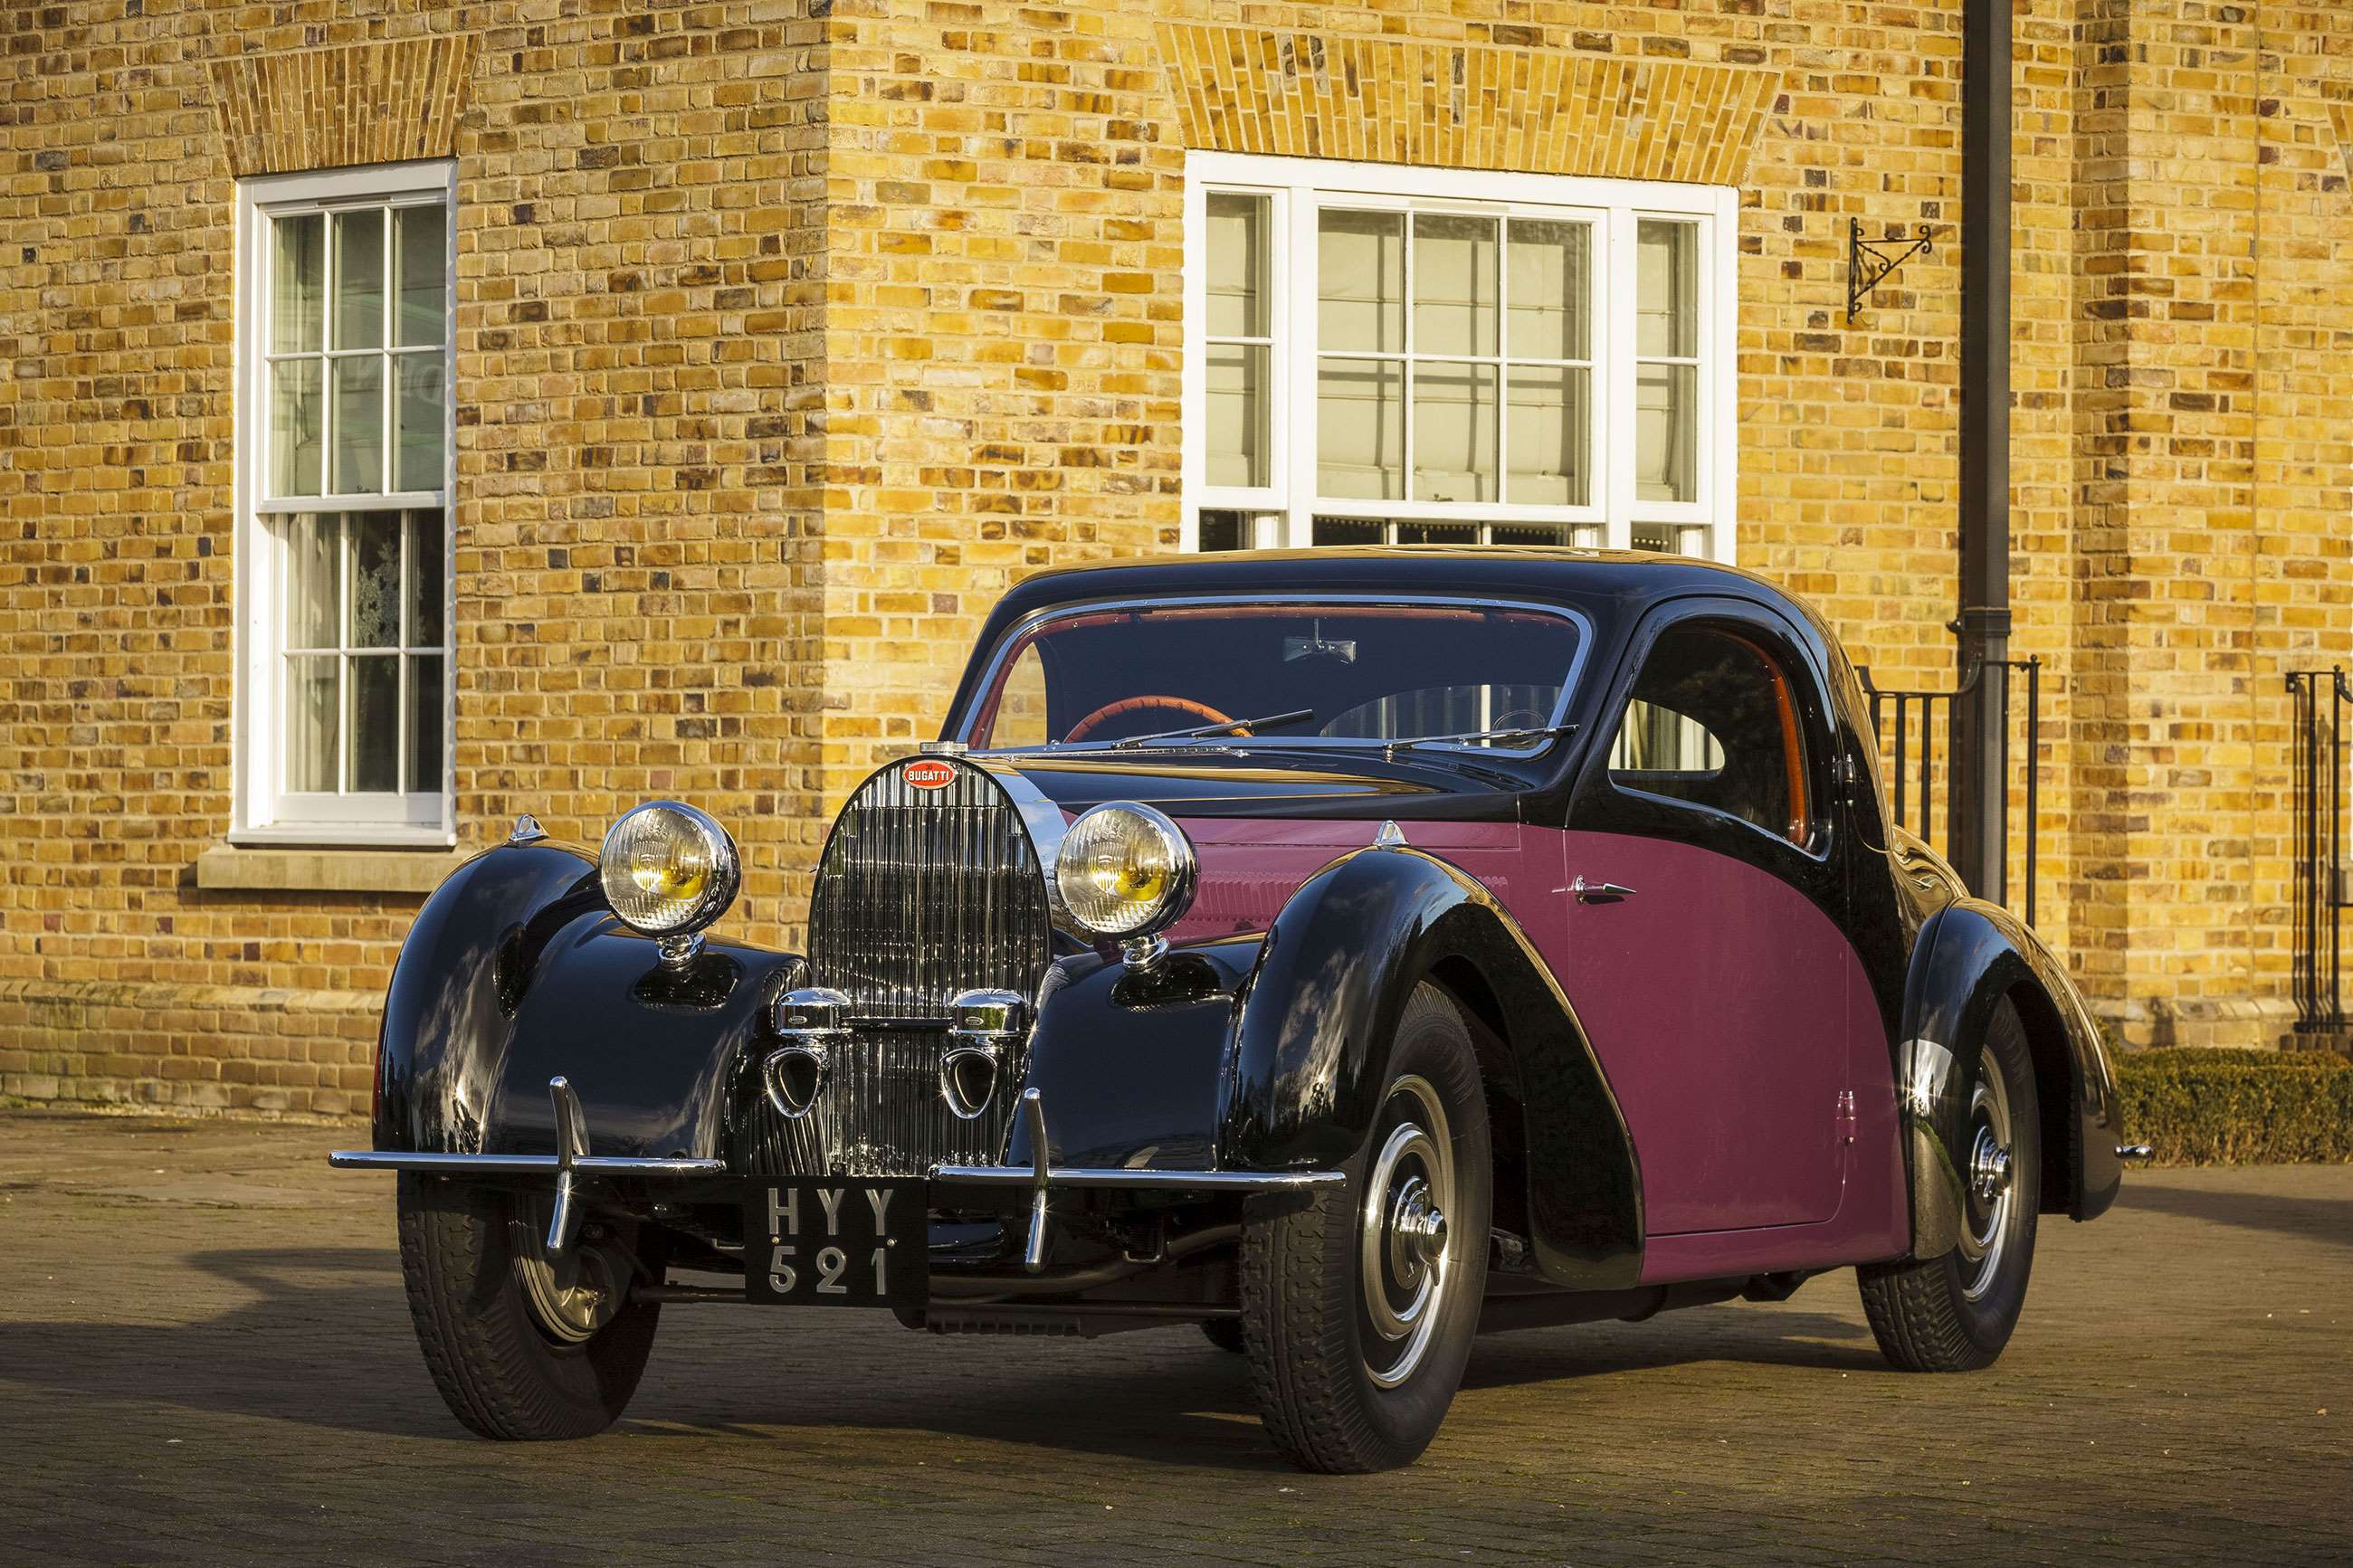 1938-bugatti-type-57-atalante-coupe-bonhams-paris-2020-goodwood-28012020.jpg